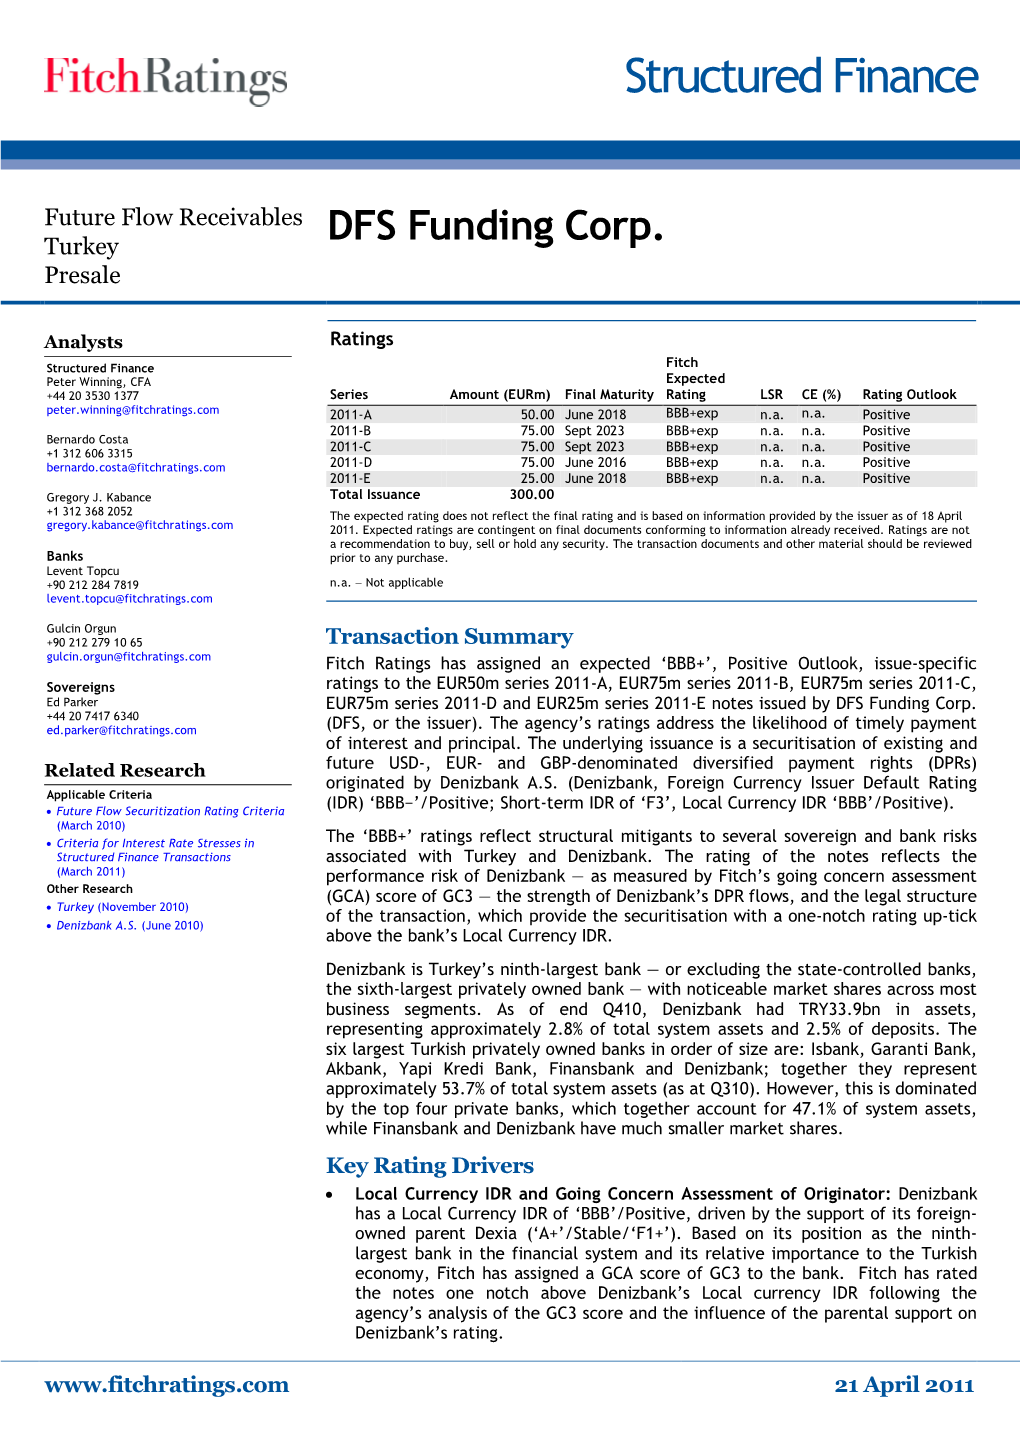 DFS Funding Corp. Presale